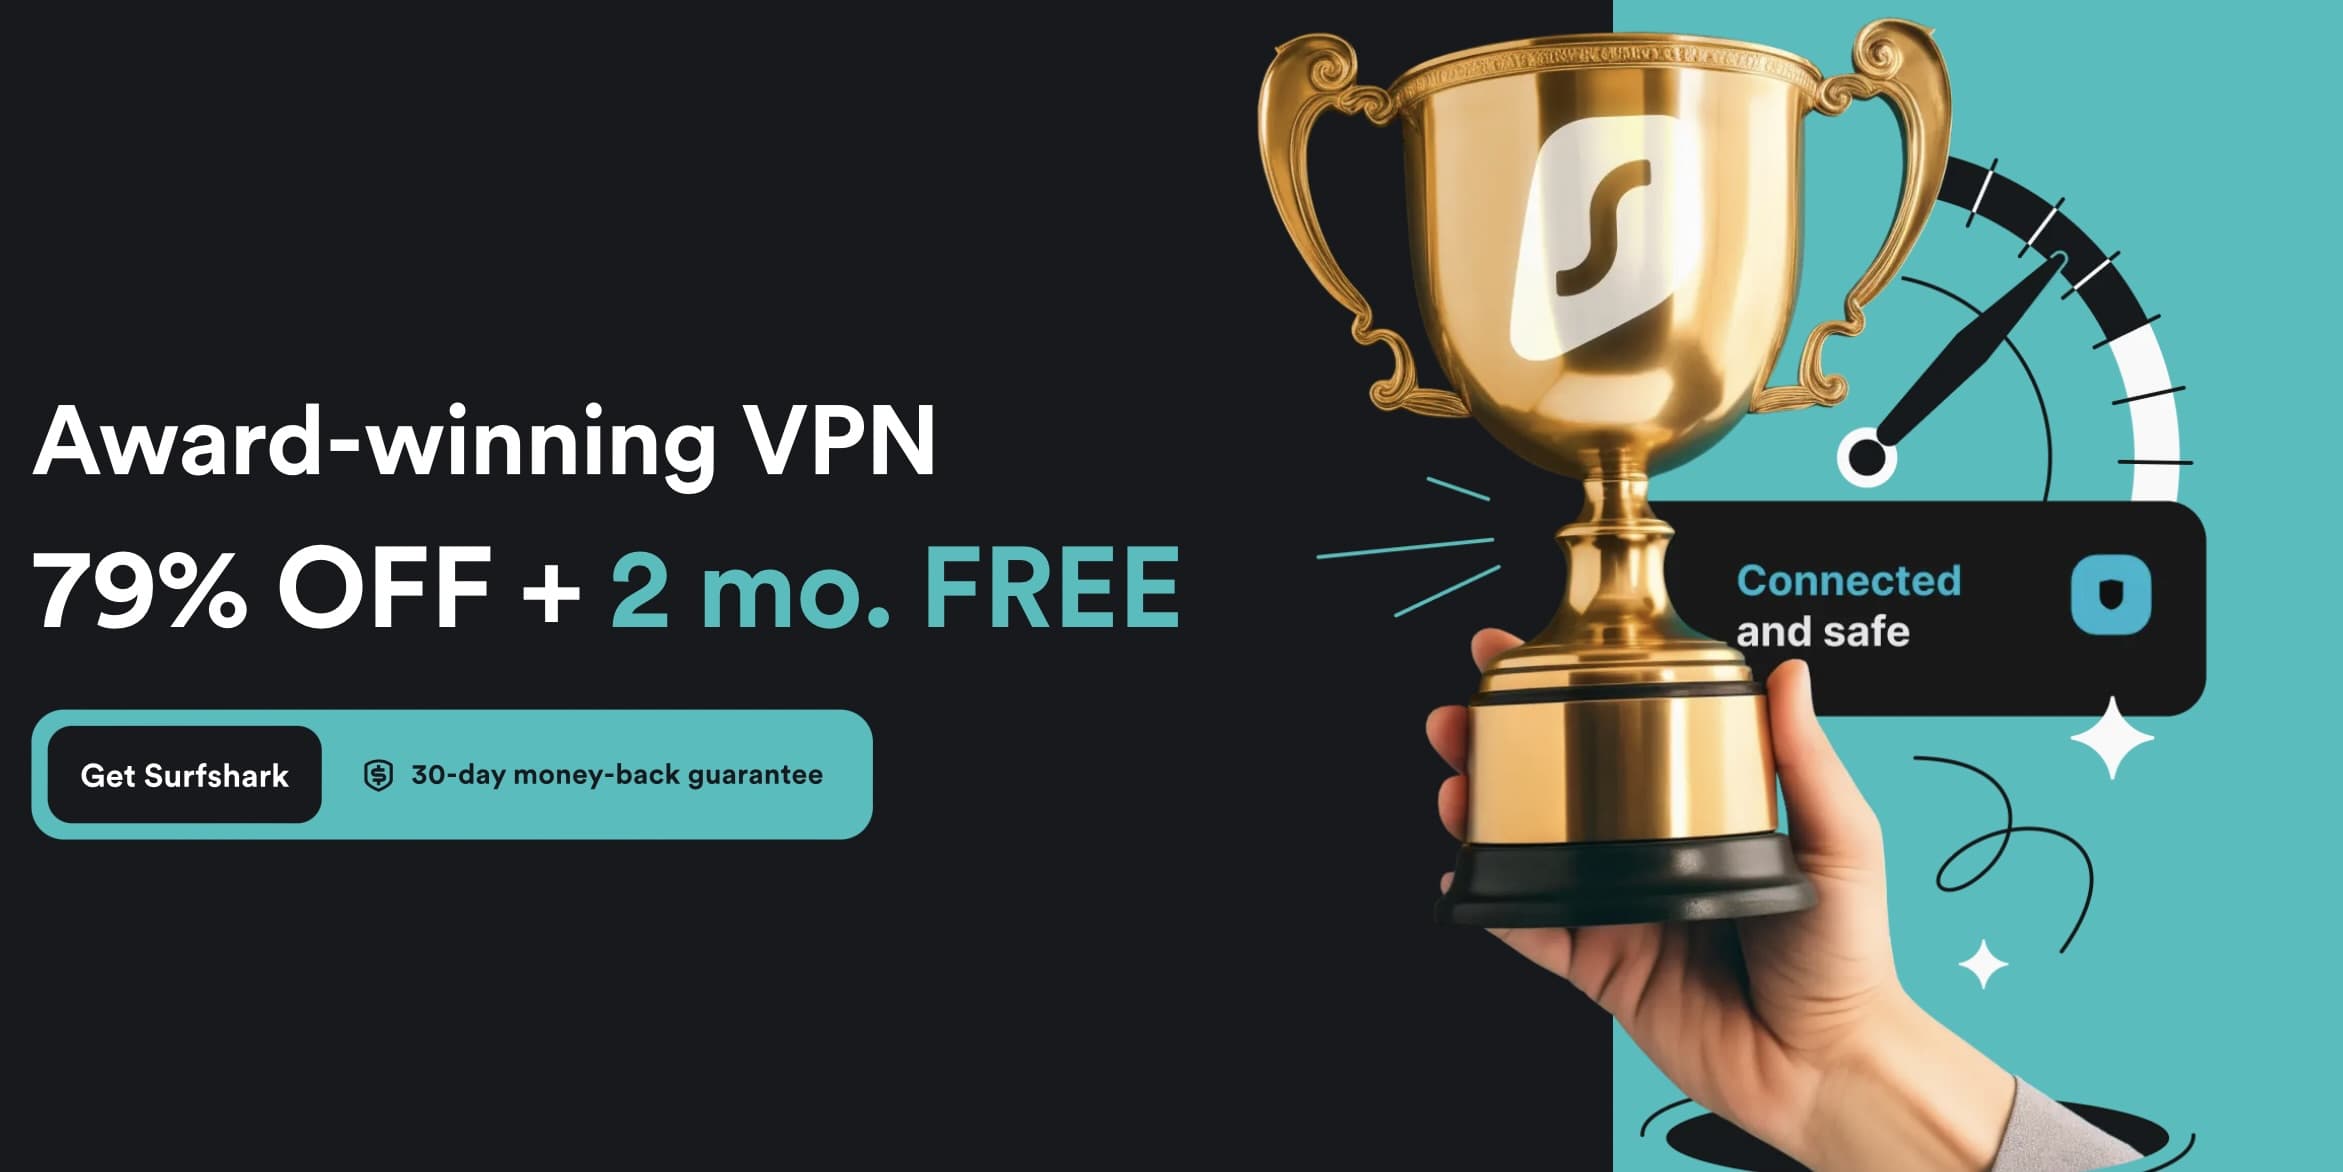 Surfshark VPN for iPhone try now 79% off